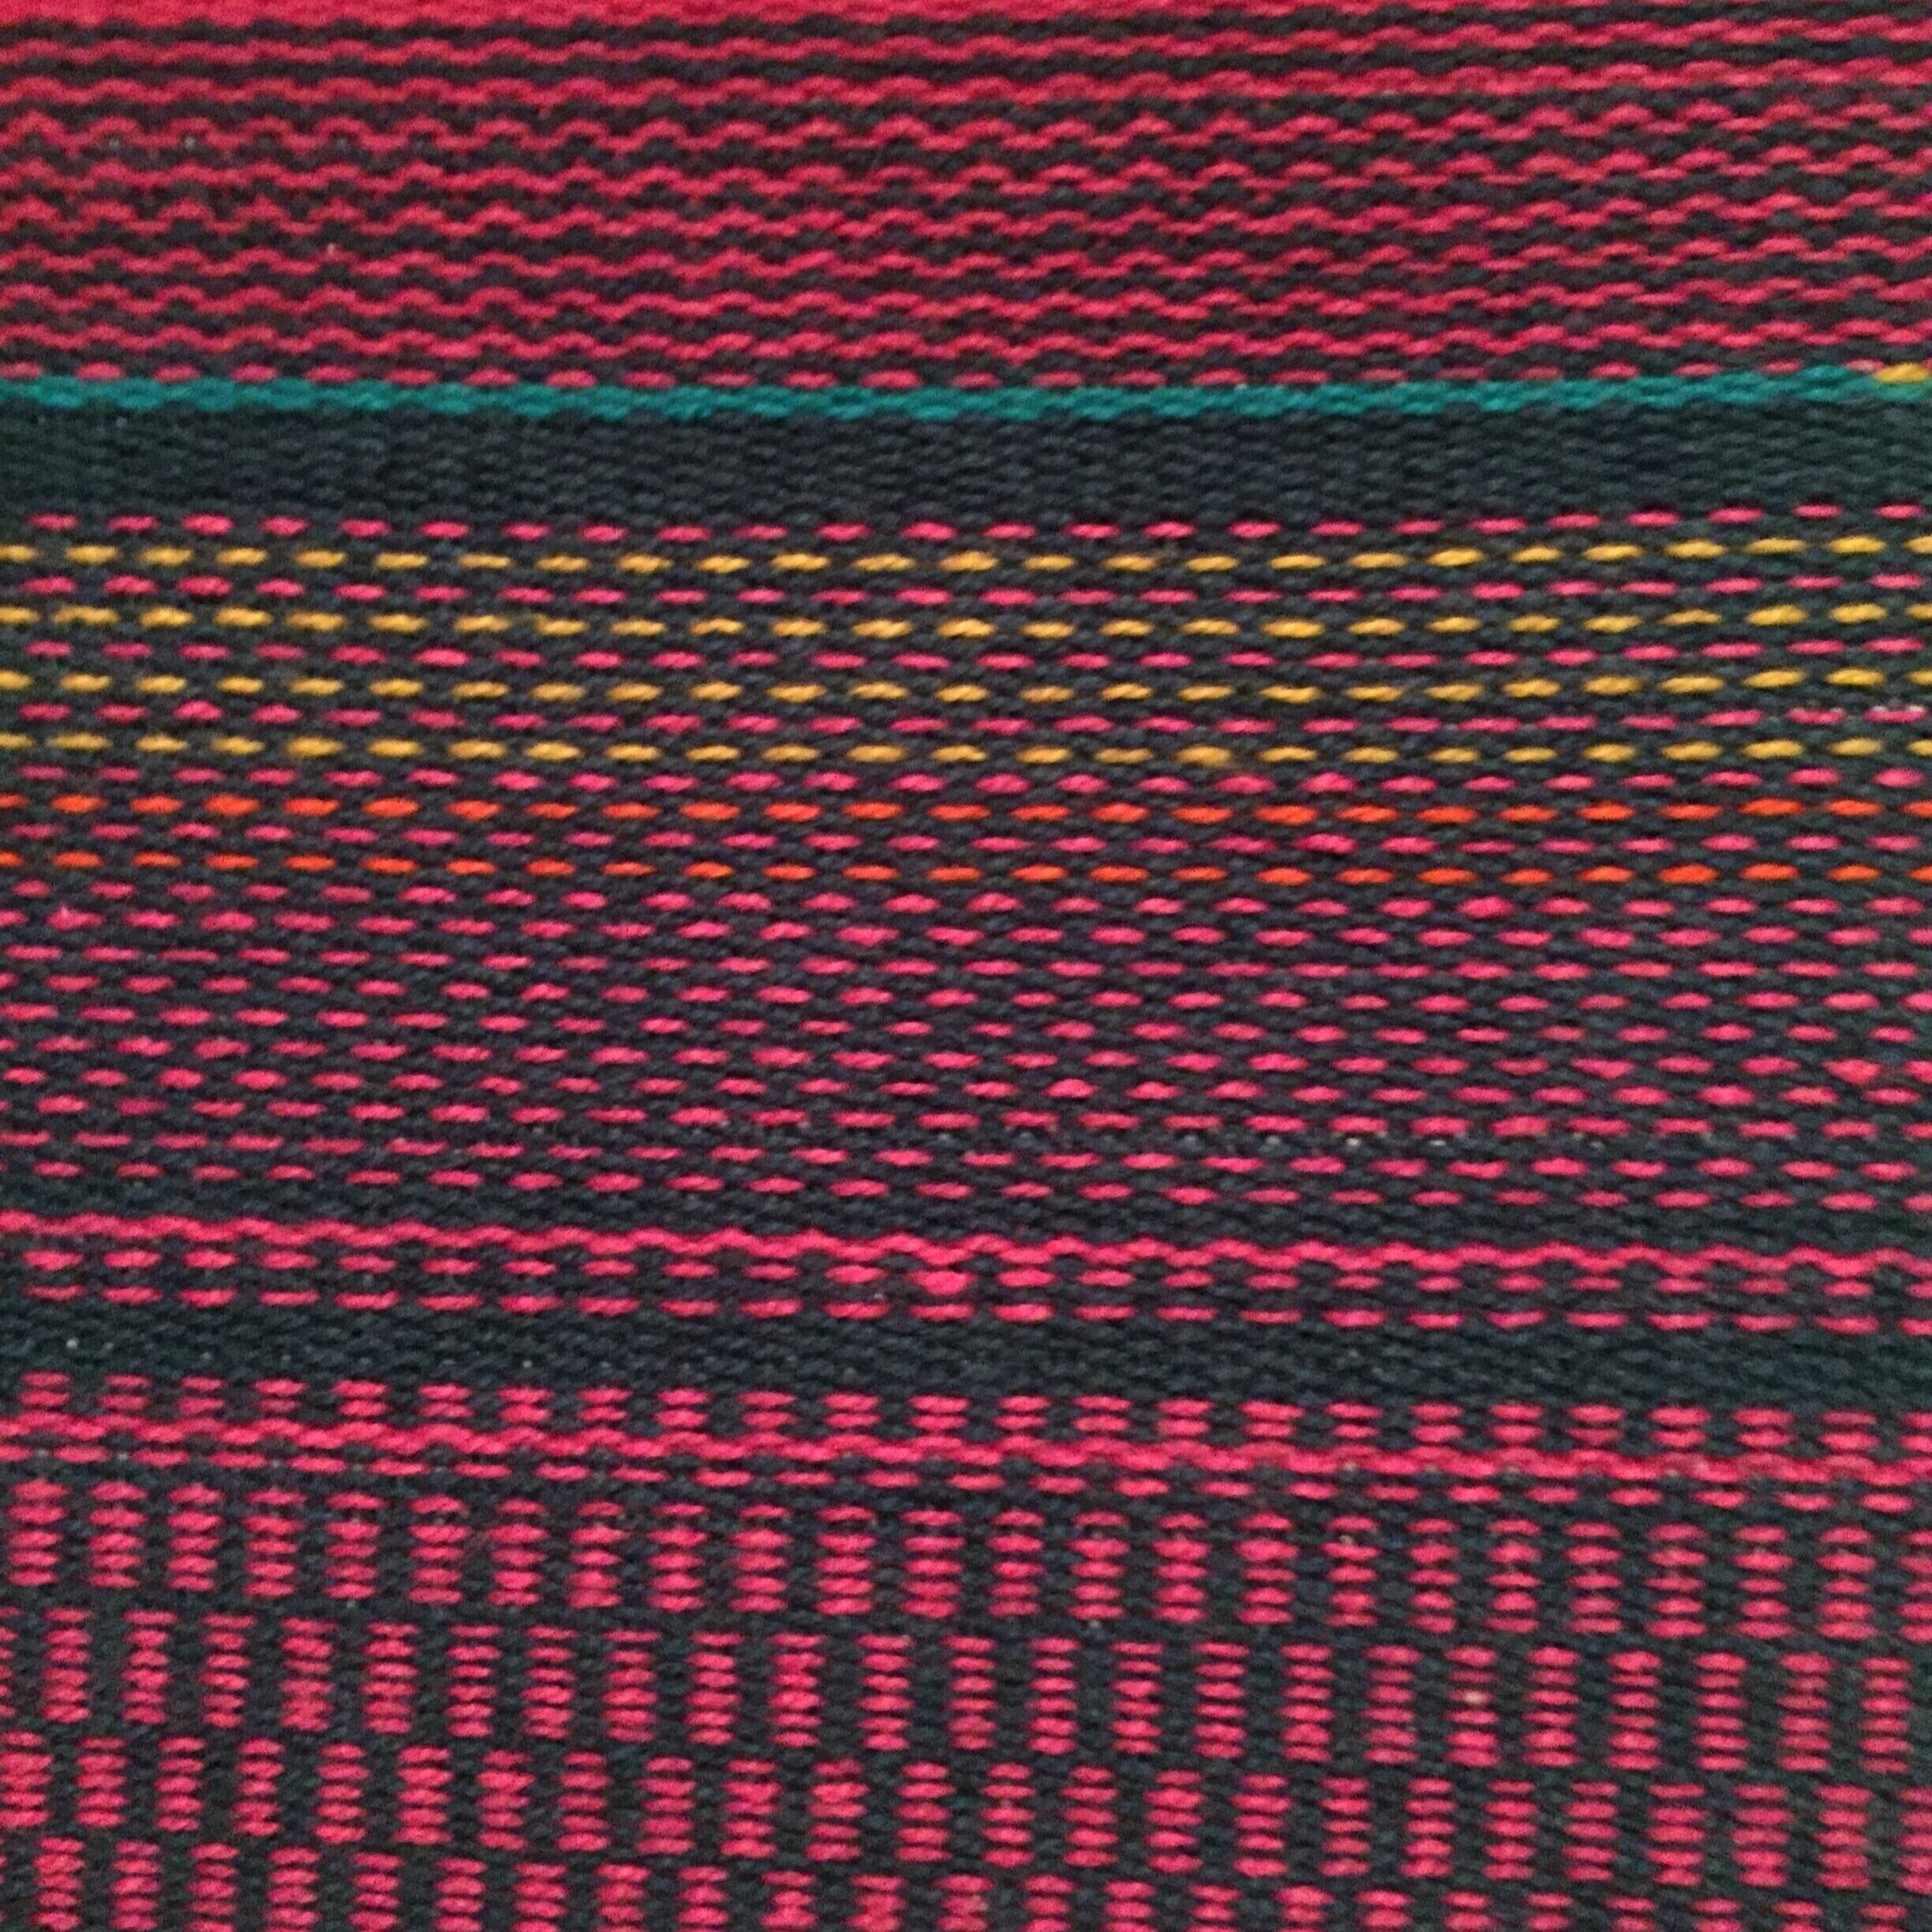 Handwoven Striped Fabric Tina Knop Morse